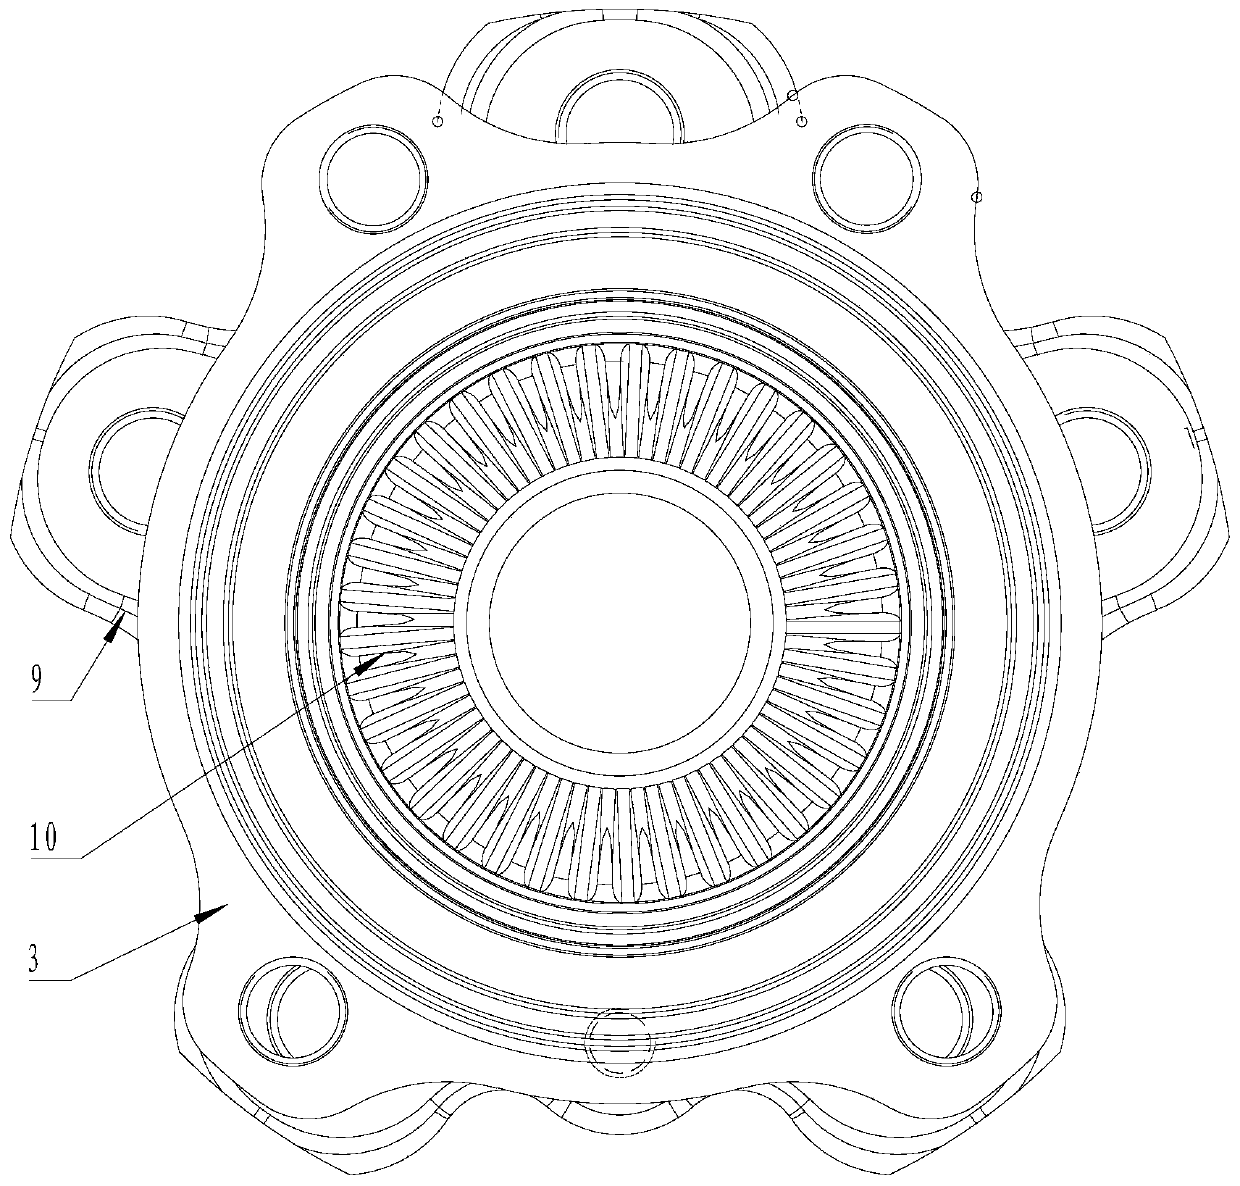 End face spline type hub bearing unit